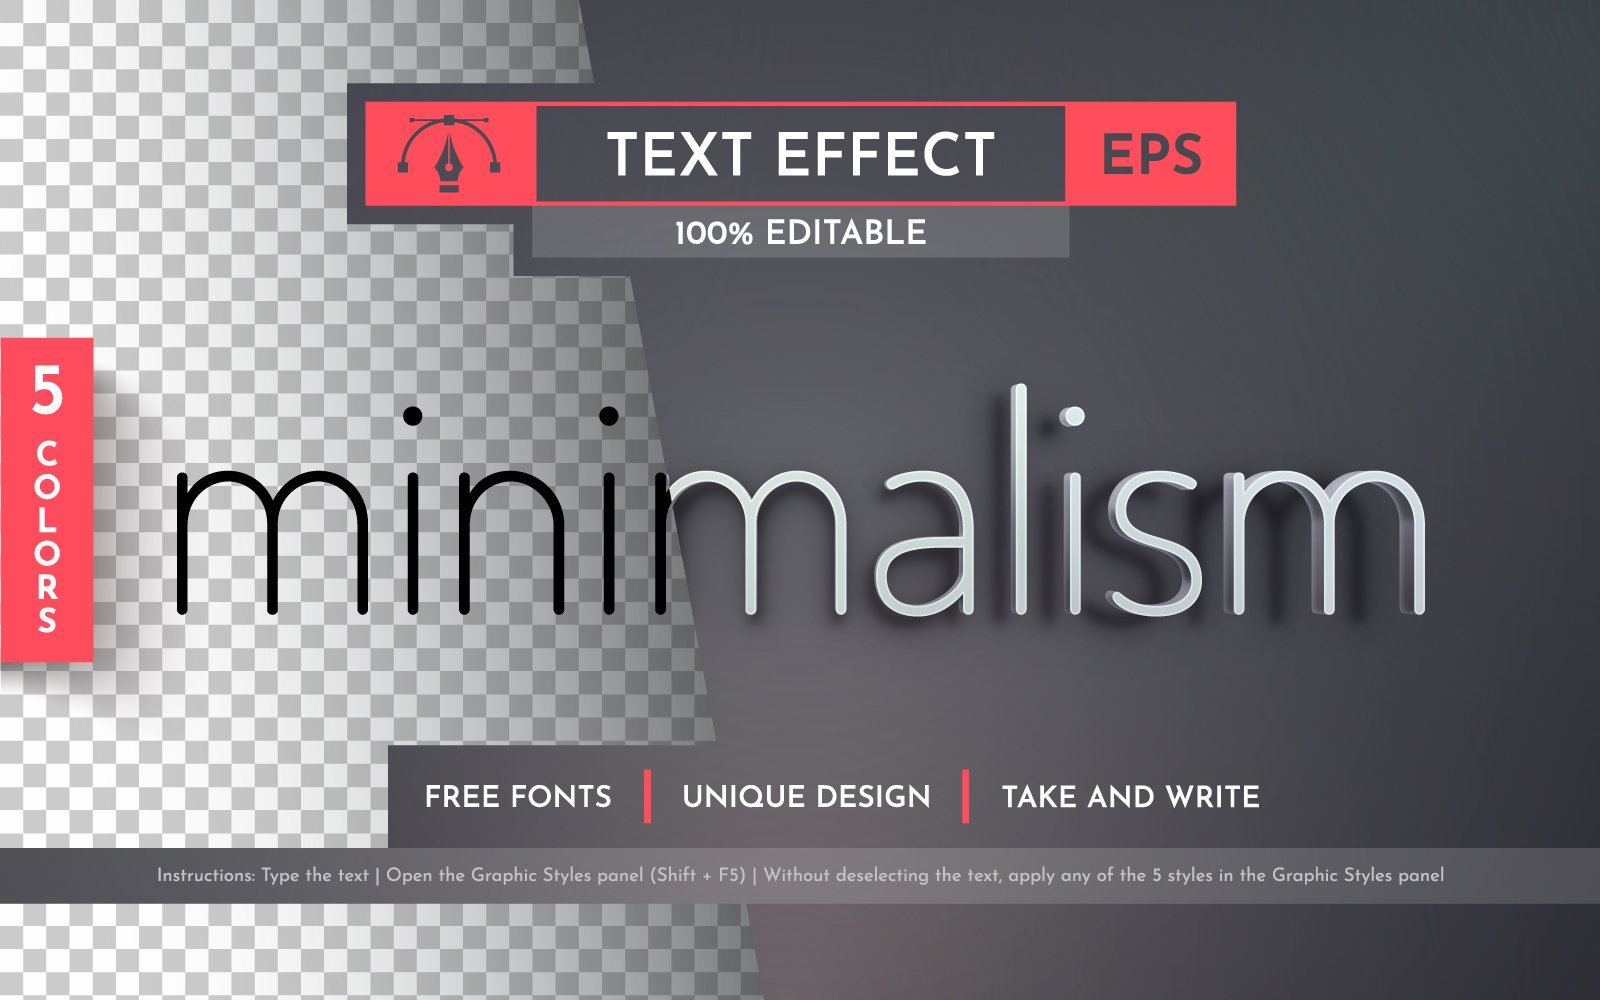 Template #402200 Text Effect Webdesign Template - Logo template Preview